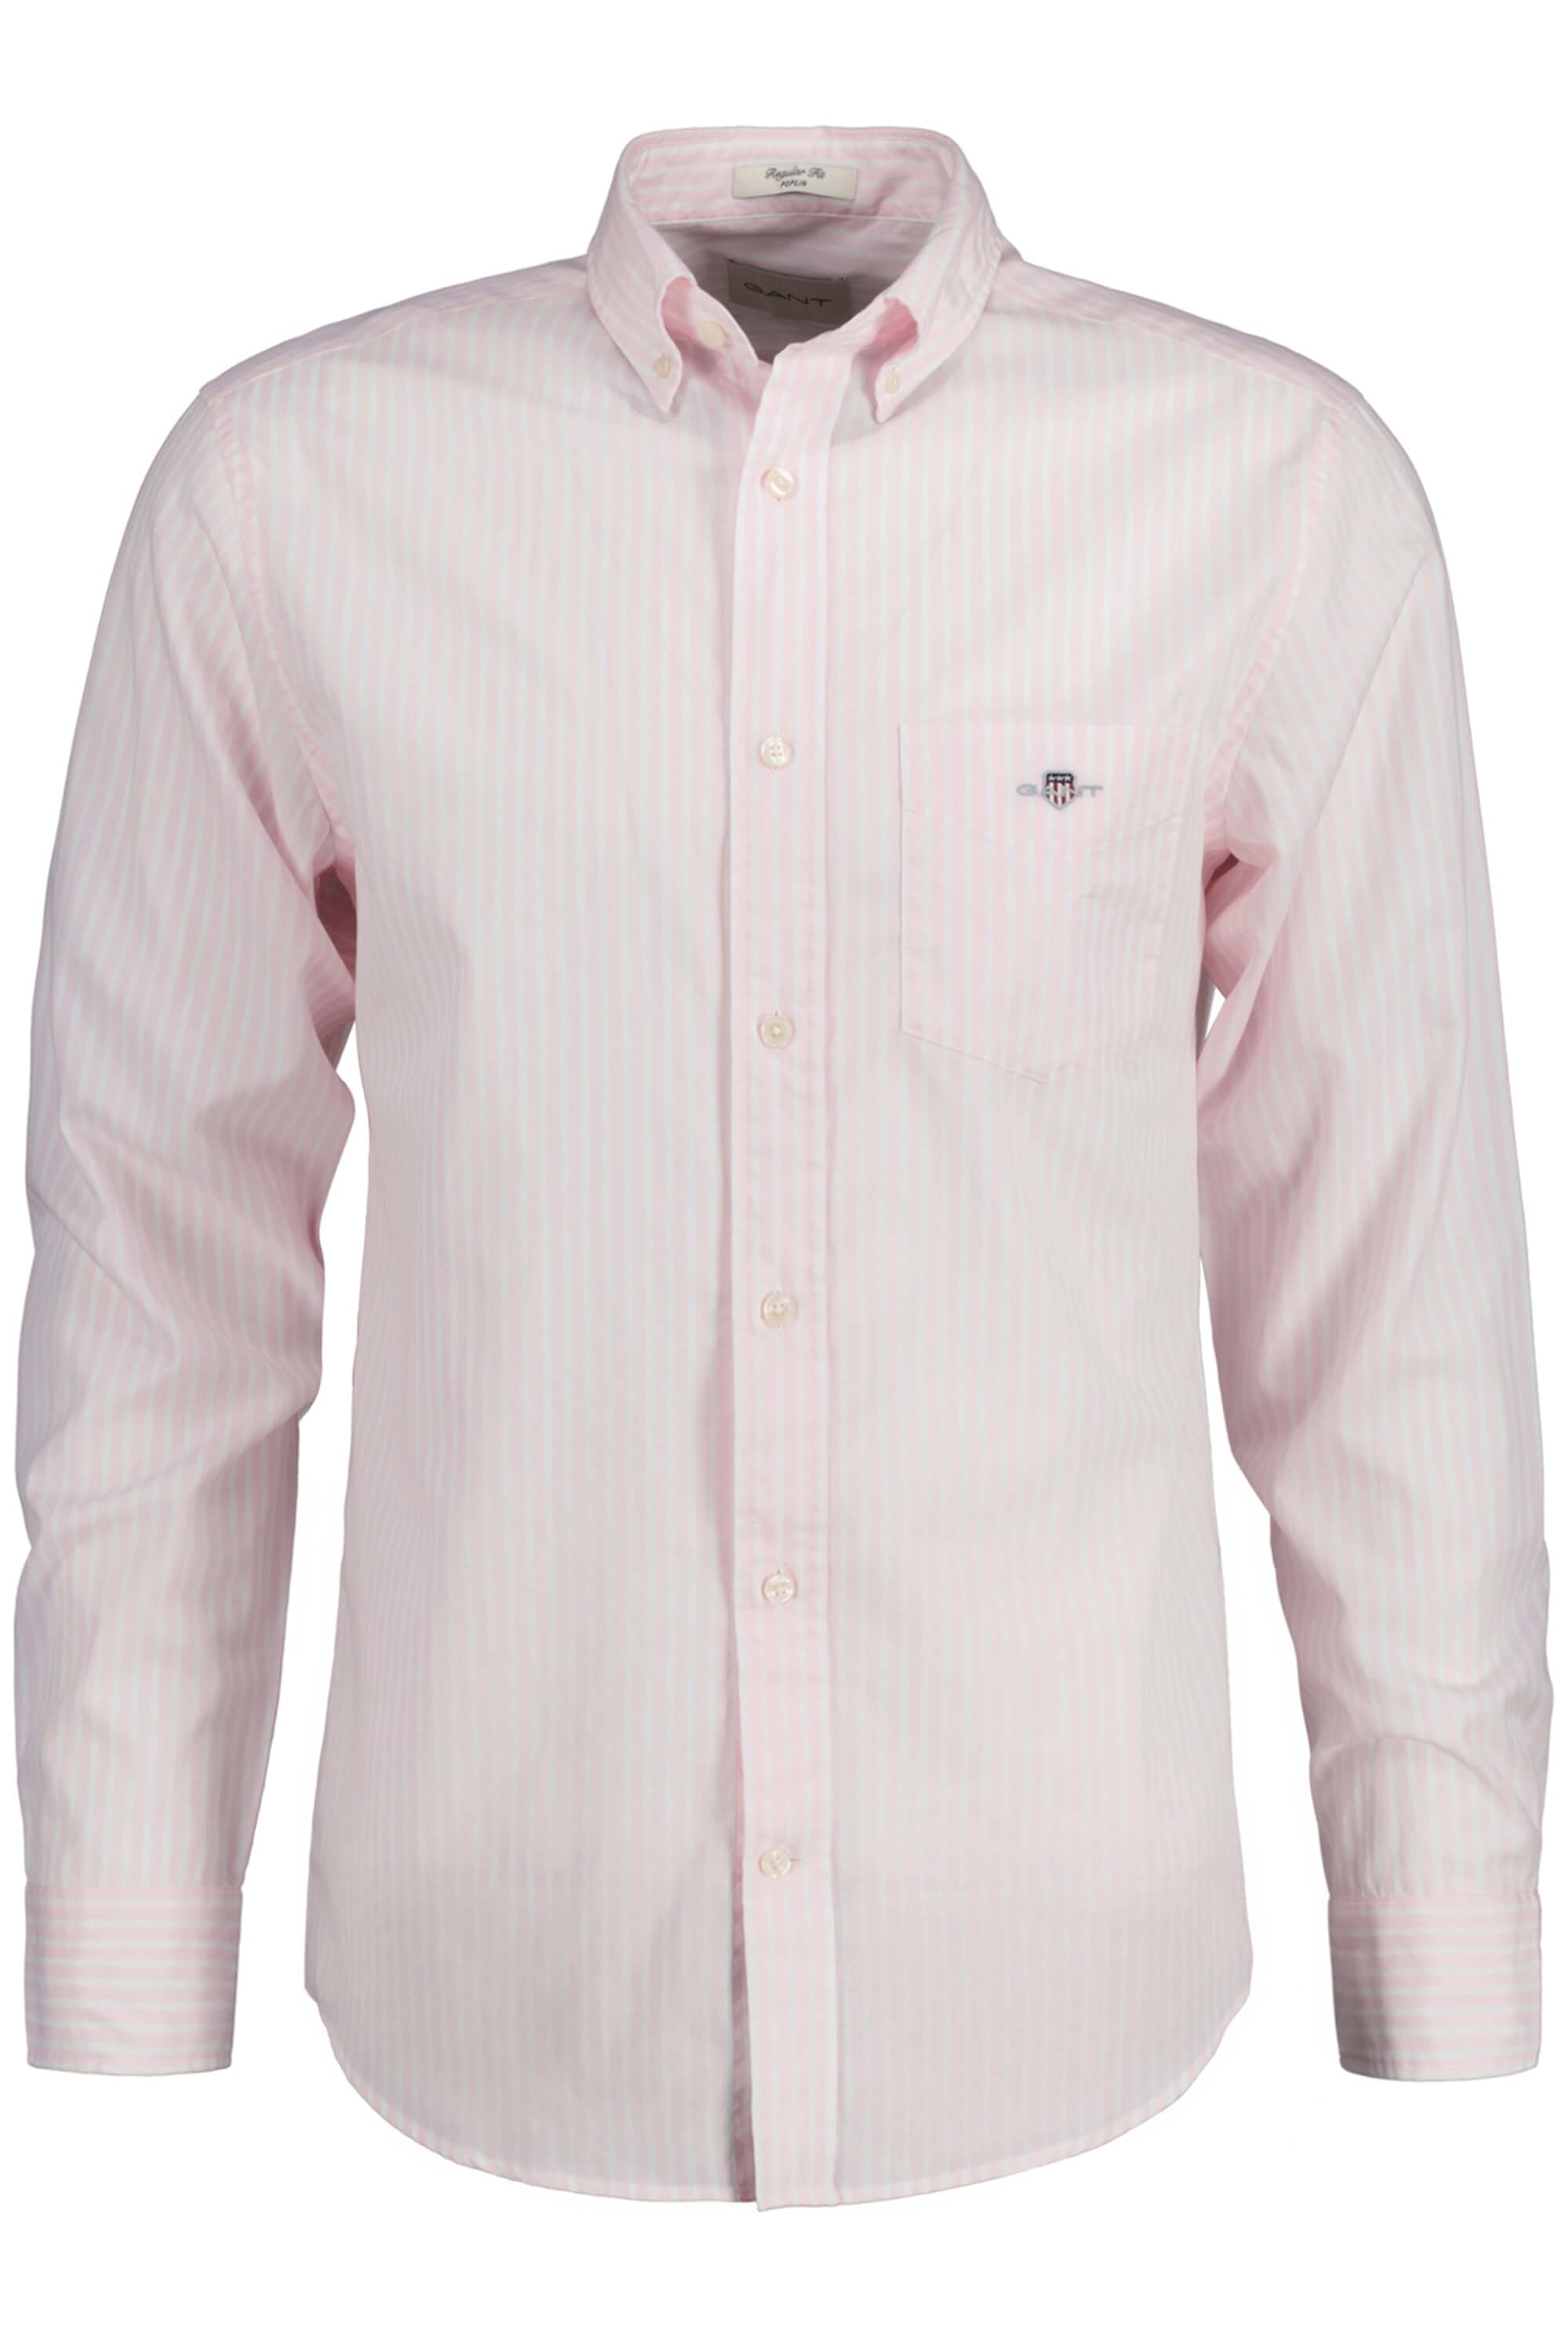 Gant Poplin Stripe Shirt Light Pink